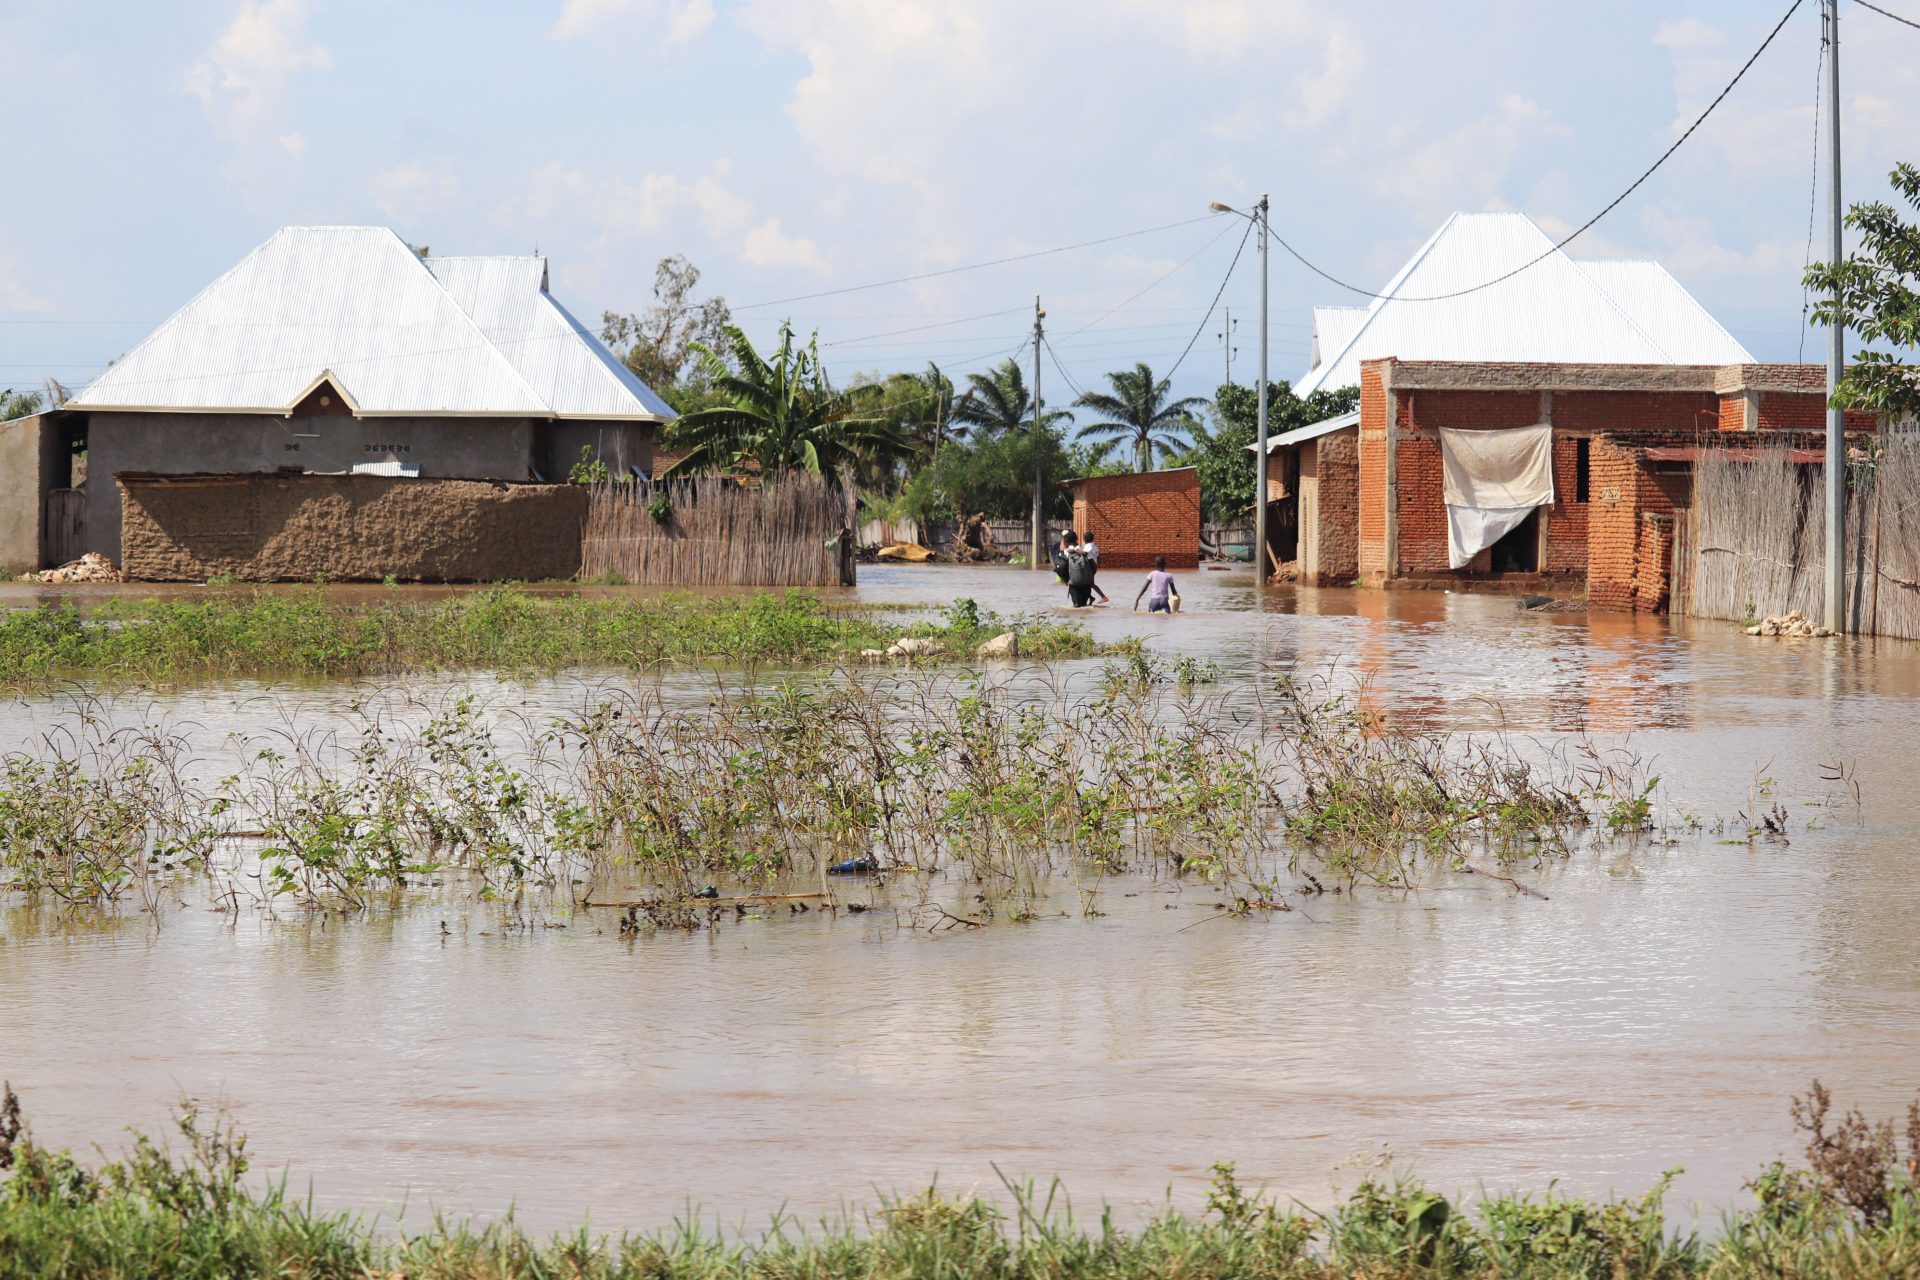 Les inondations de Gatumba : la population menacée par la famine